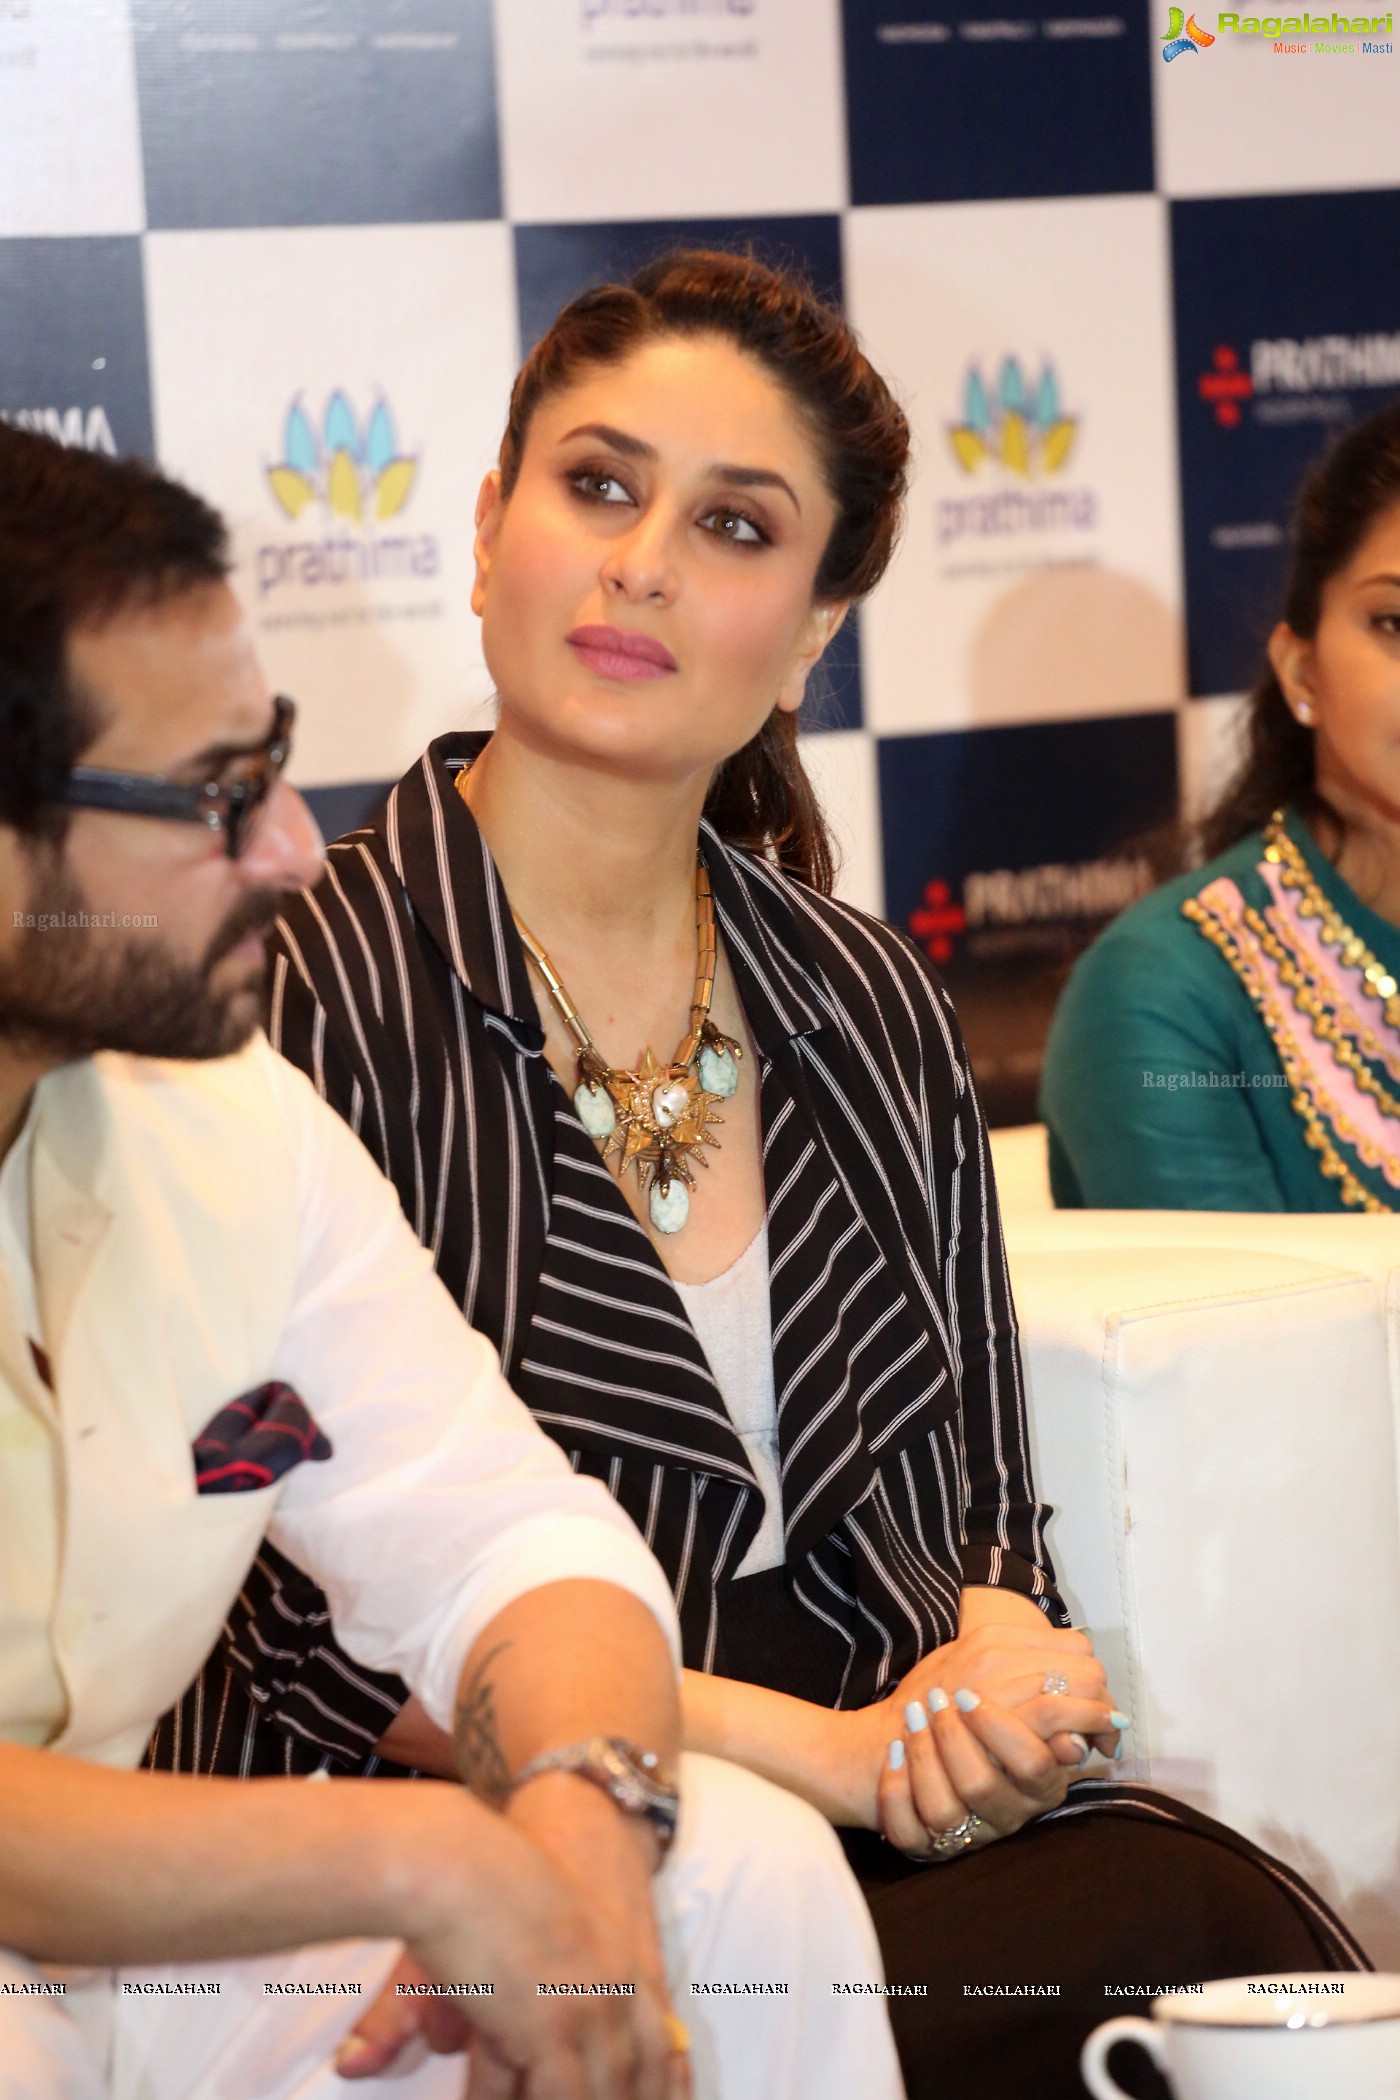 Saif Ali Khan and Kareena Kapoor at Prathima Hospitals Brand Ambassador Announcement